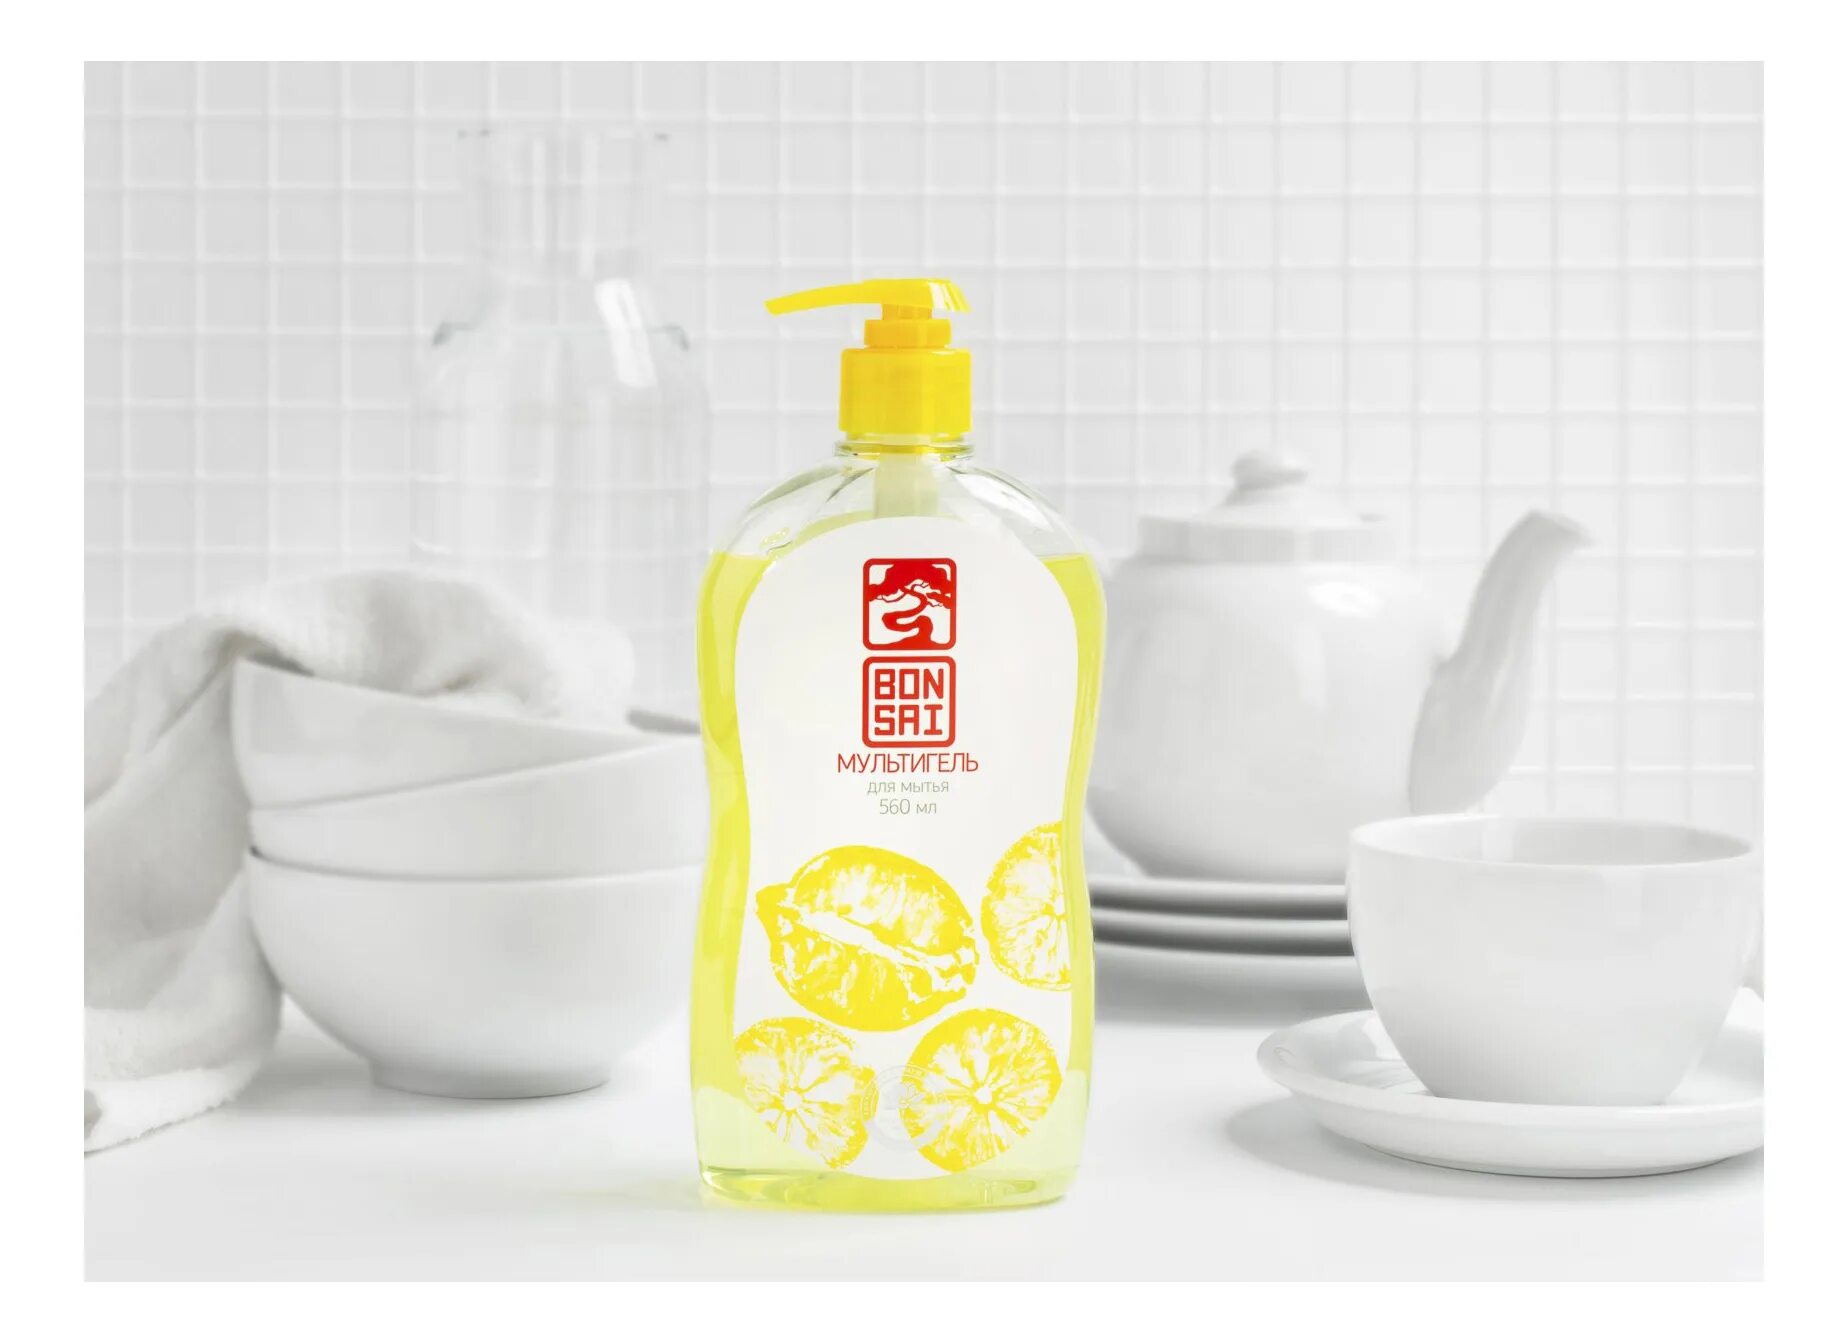 Bonsai средство для мытья посуды. Реклама средства для мытья посуды. Bonsai гель для мытья посуды. Посуда для бонсай. Упаковка для средства для мытья посуды